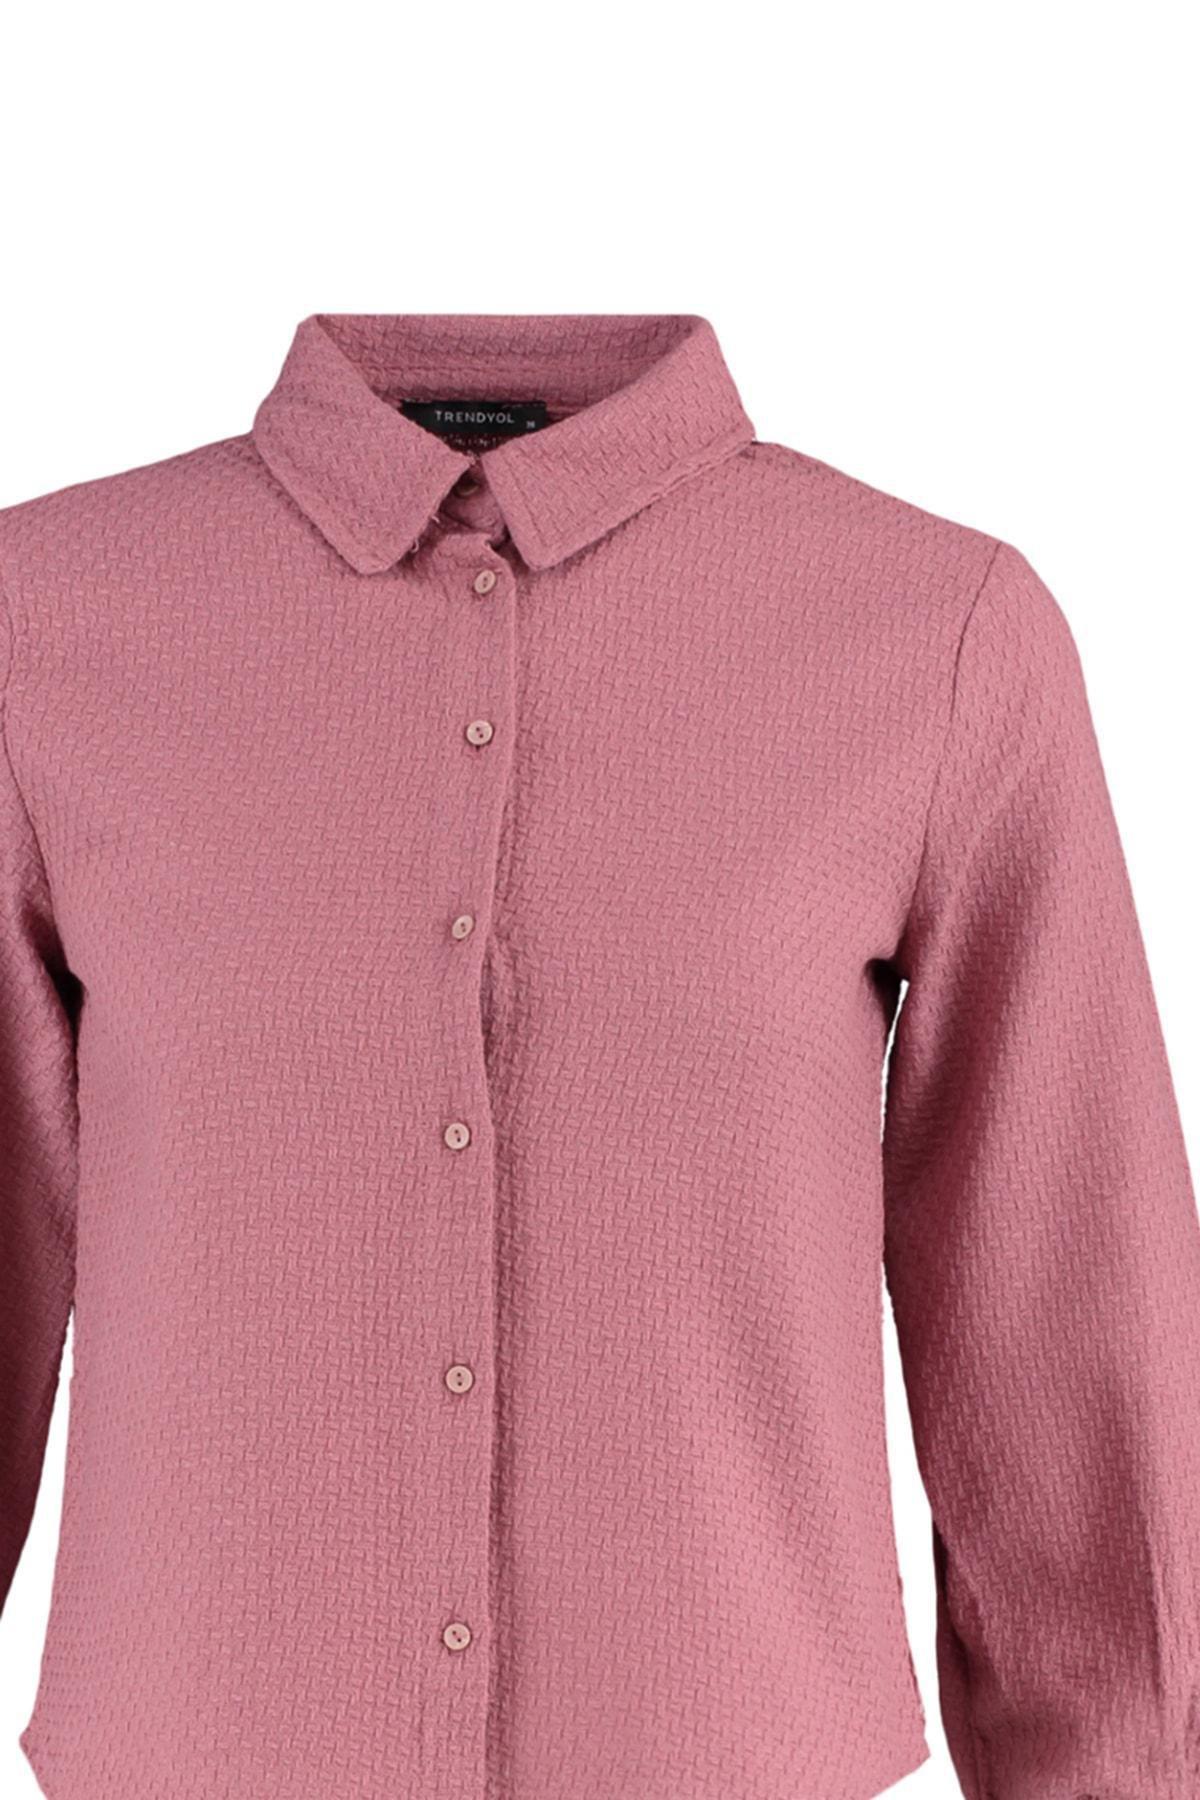 Trendyol - Pink Oversize Shirt